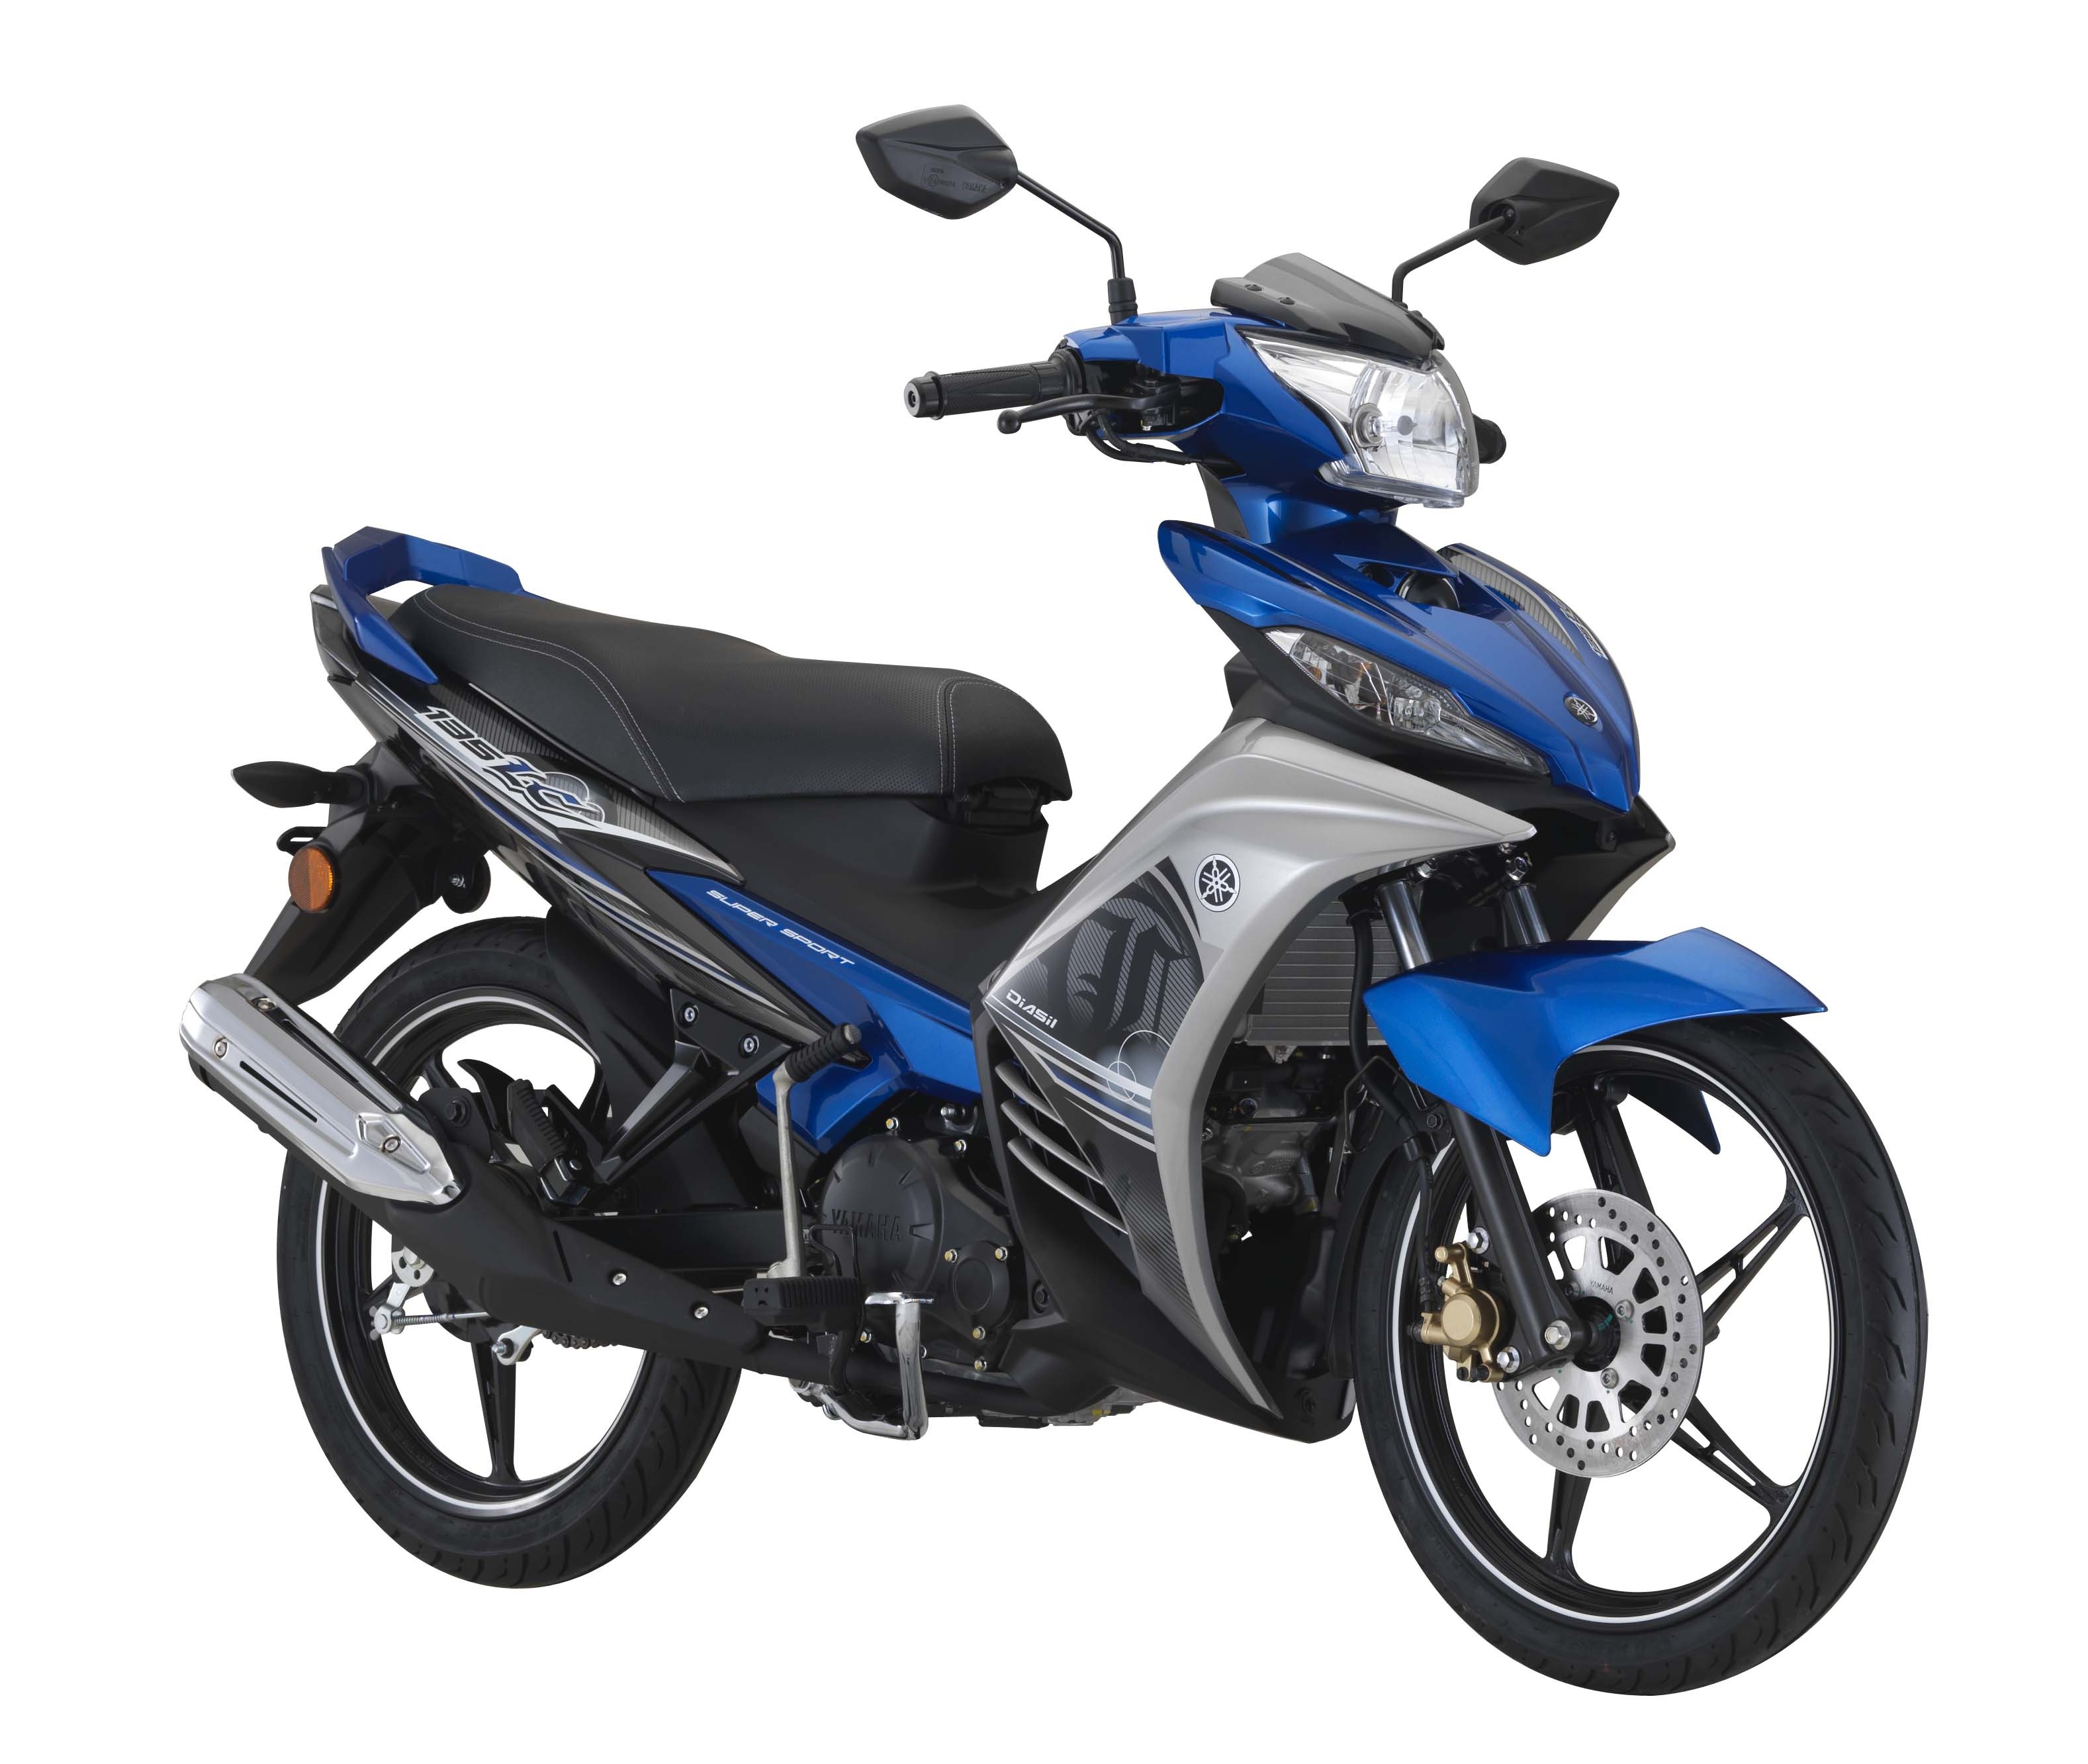 2016 Yamaha 135LC price confirmed, up to RM7,068 2016 Yamaha LC135 ...